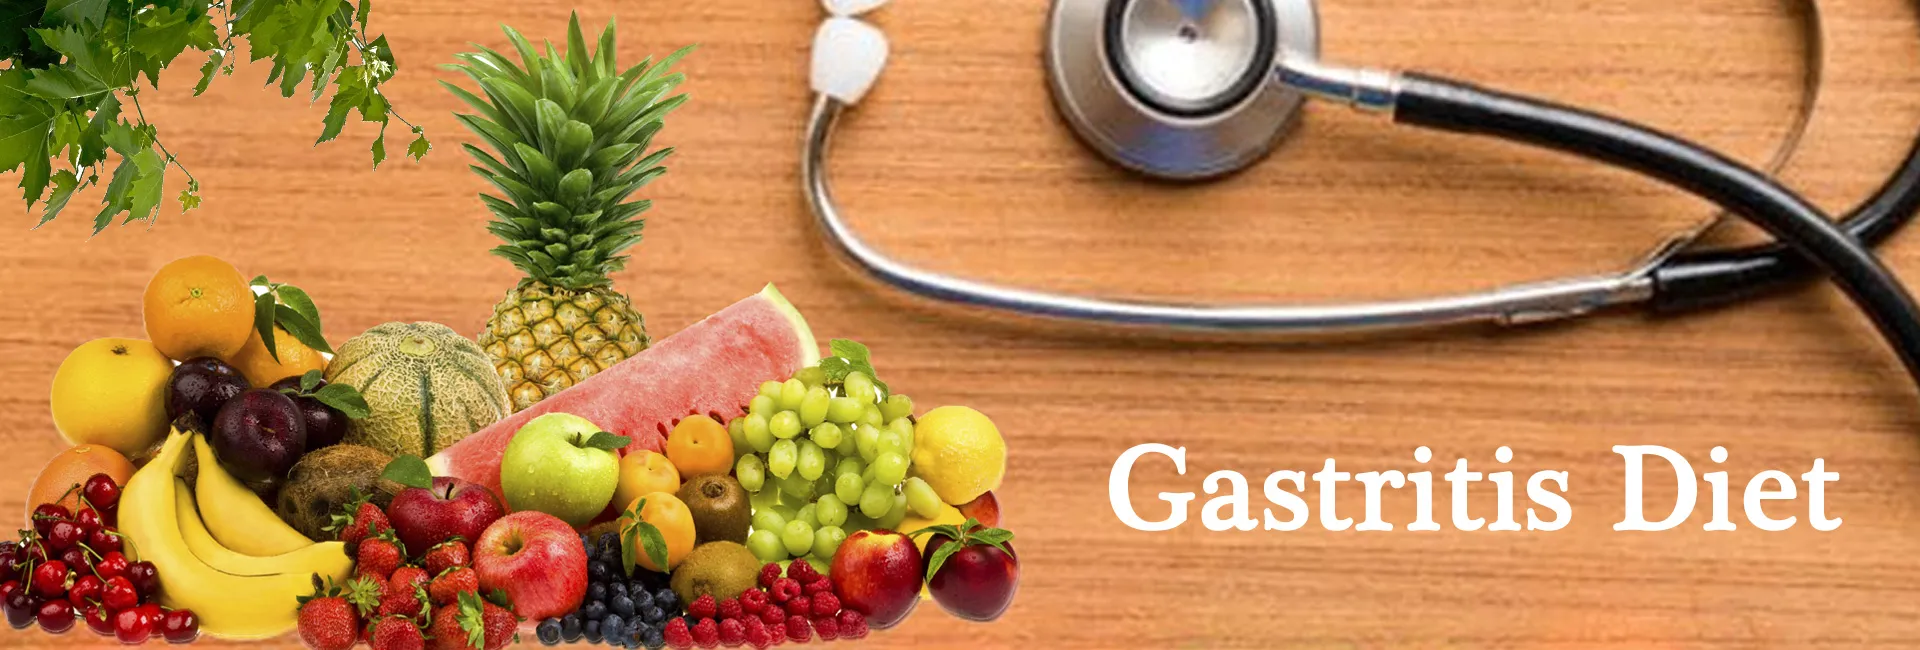 Gastritis Diet In Asimah